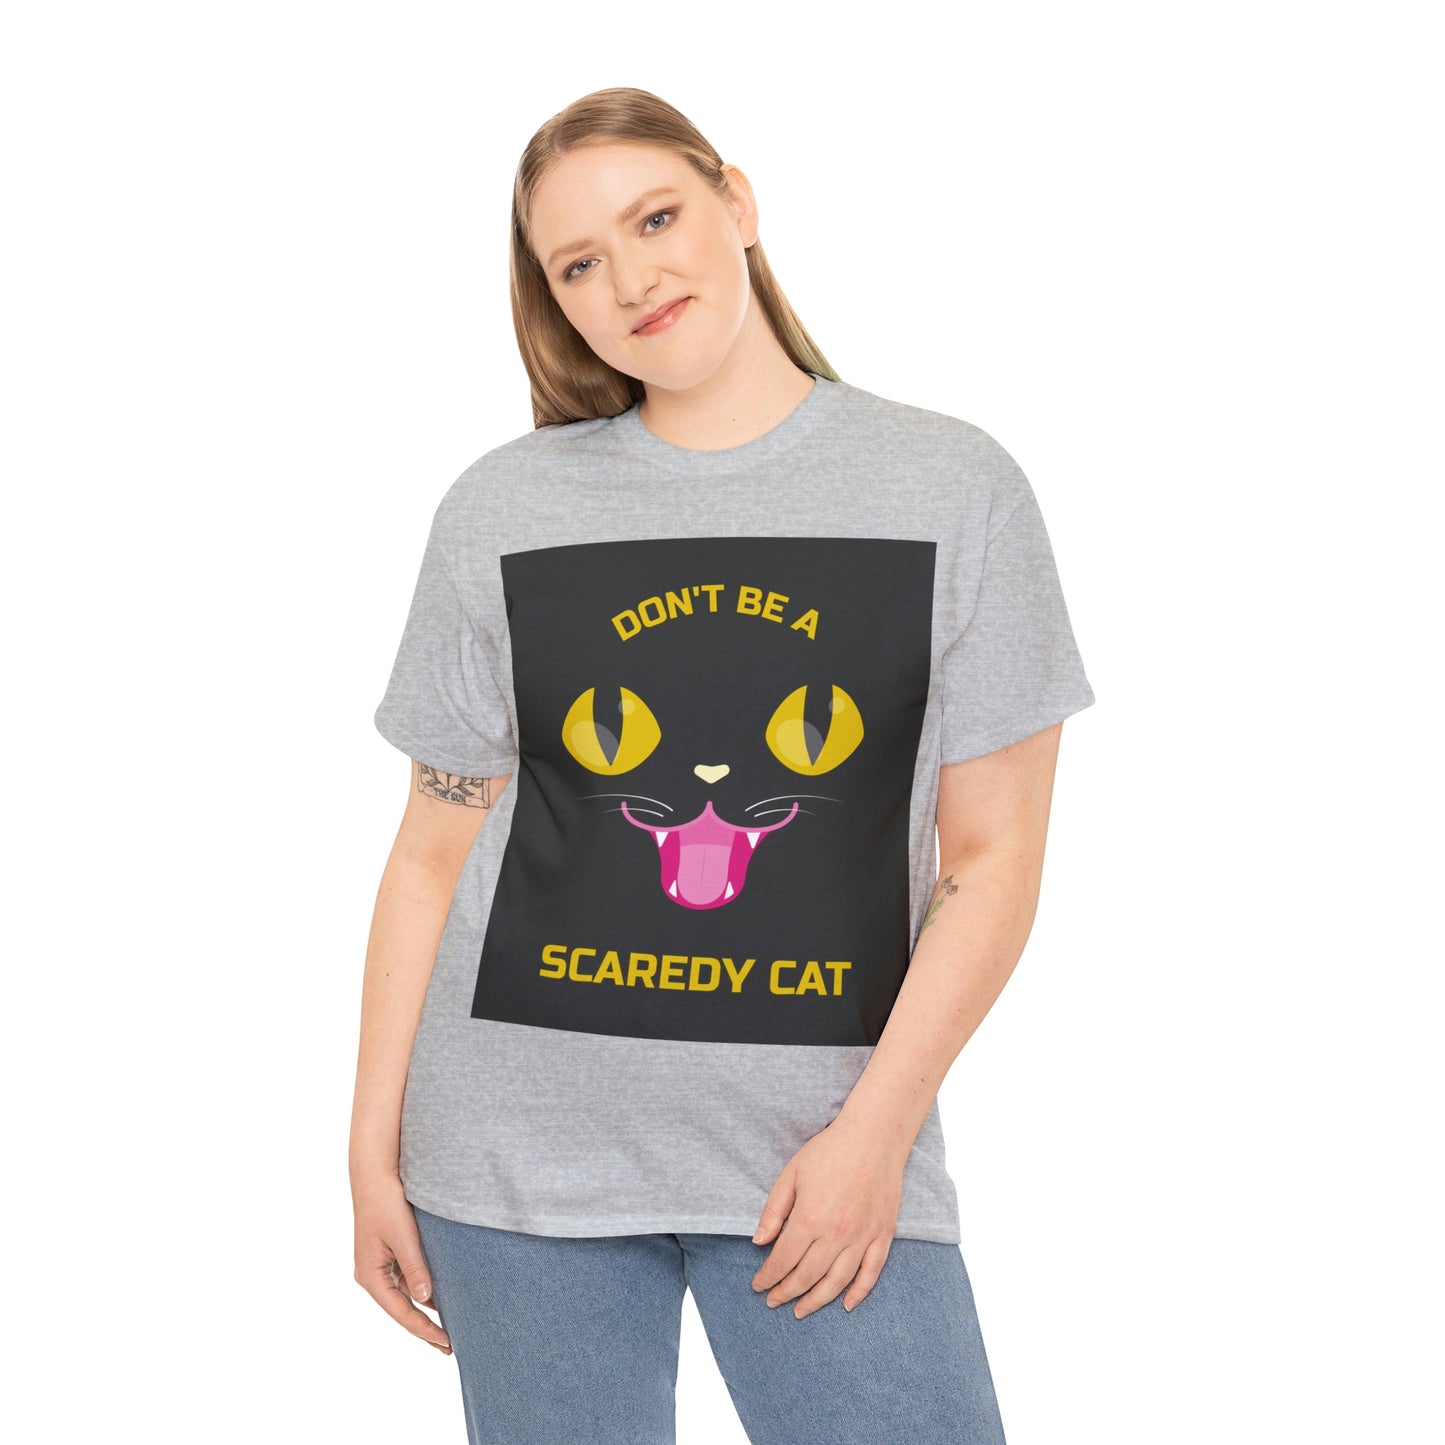 Scaredy Cat